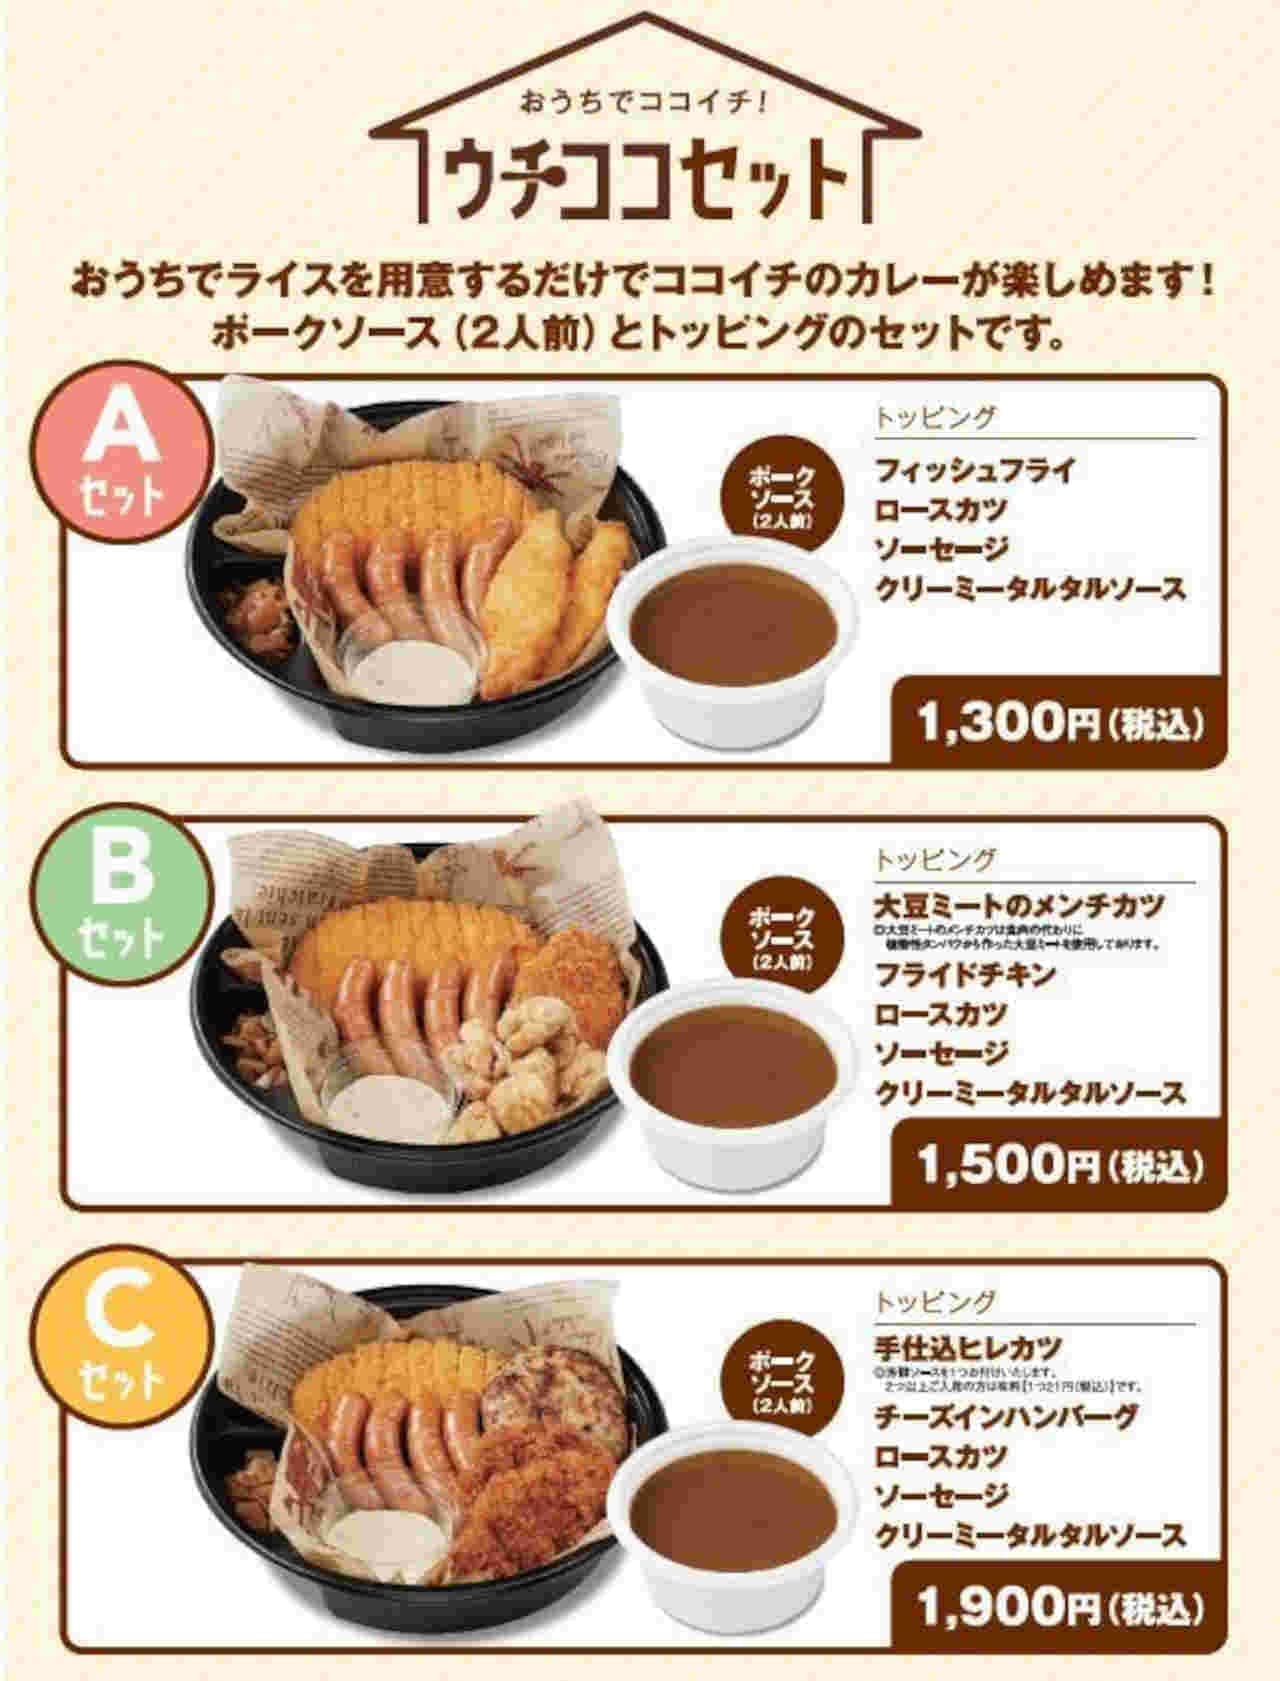 CoCo Ichibanya's new menu